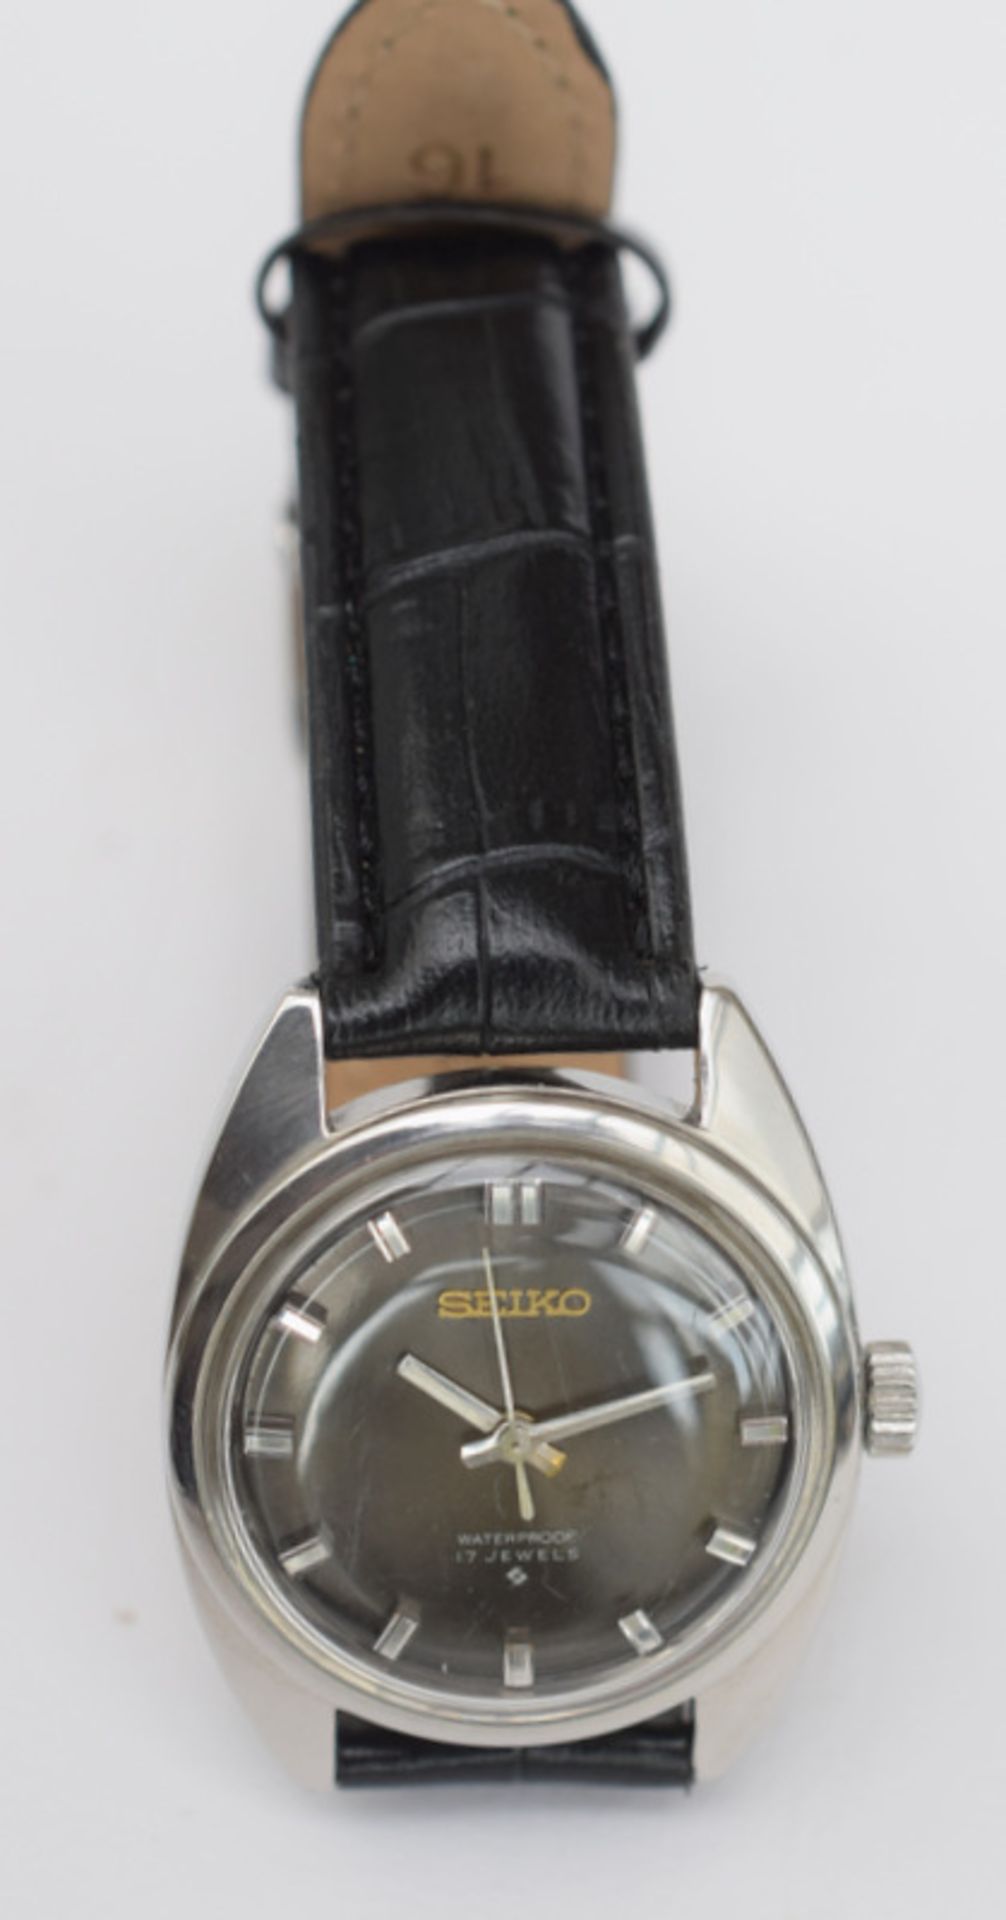 Vintage Seiko 7061 Black Dial Watch - Image 2 of 4